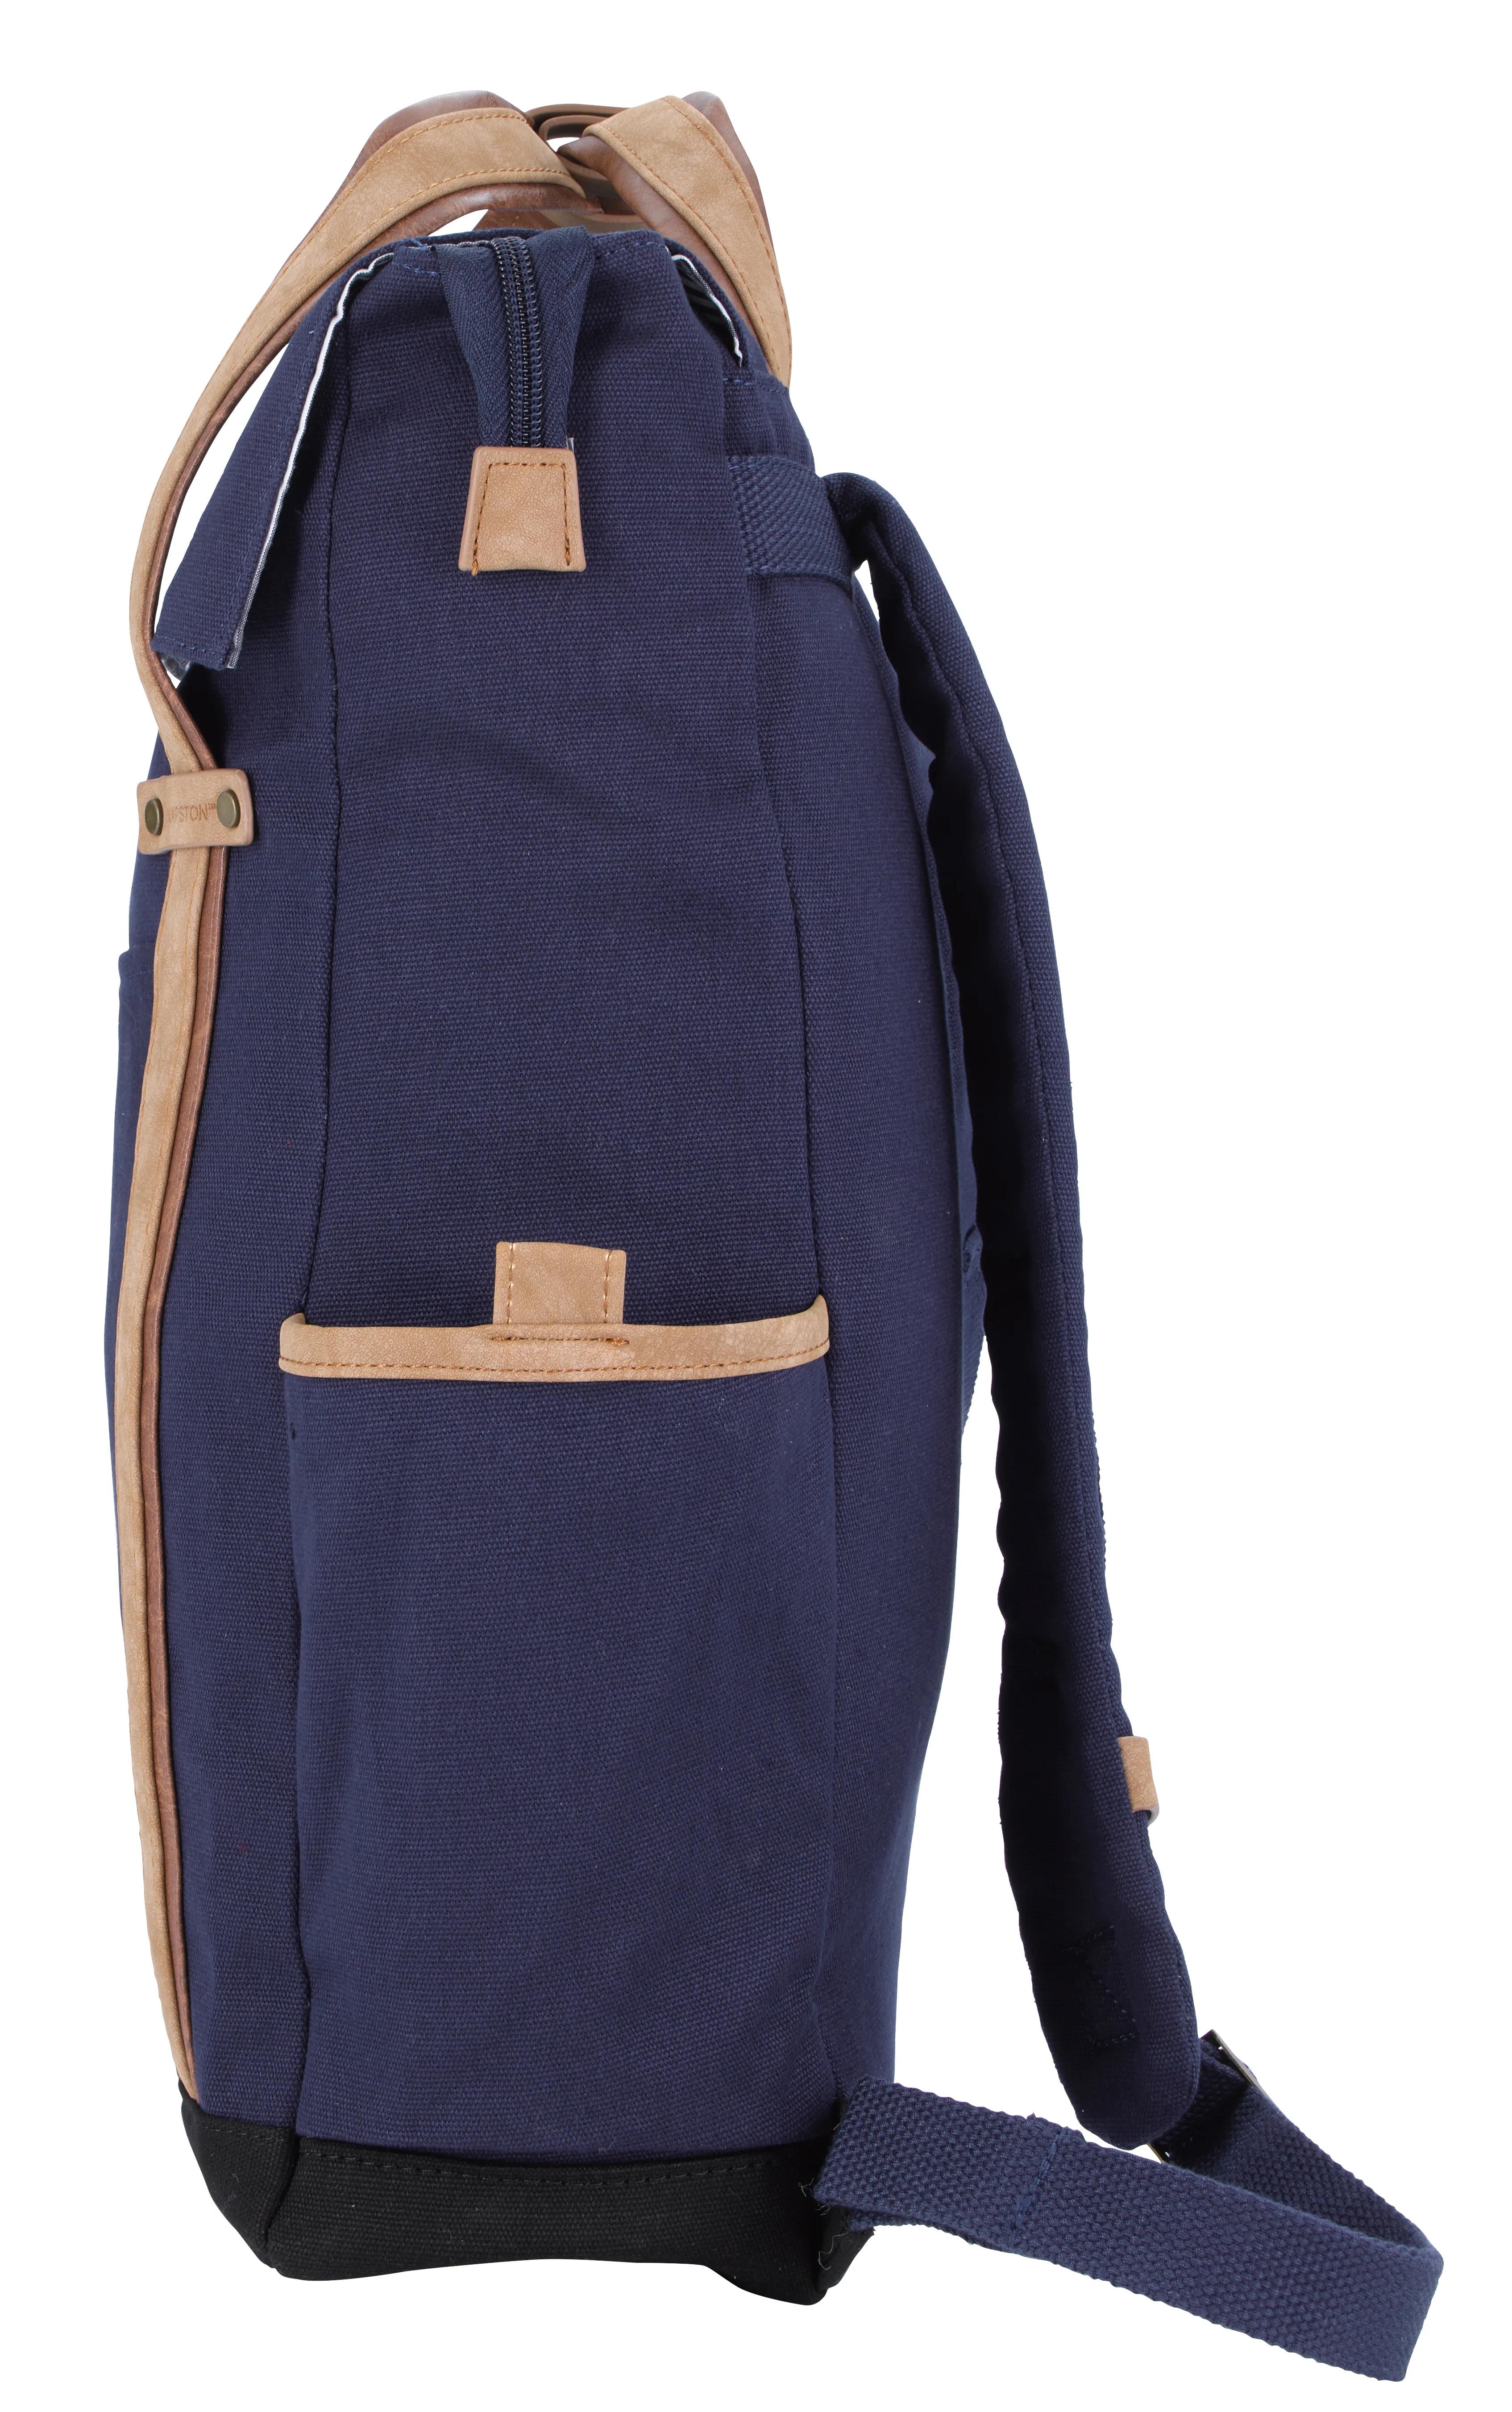 KAPSTON® San Marco Backpack 5 of 30